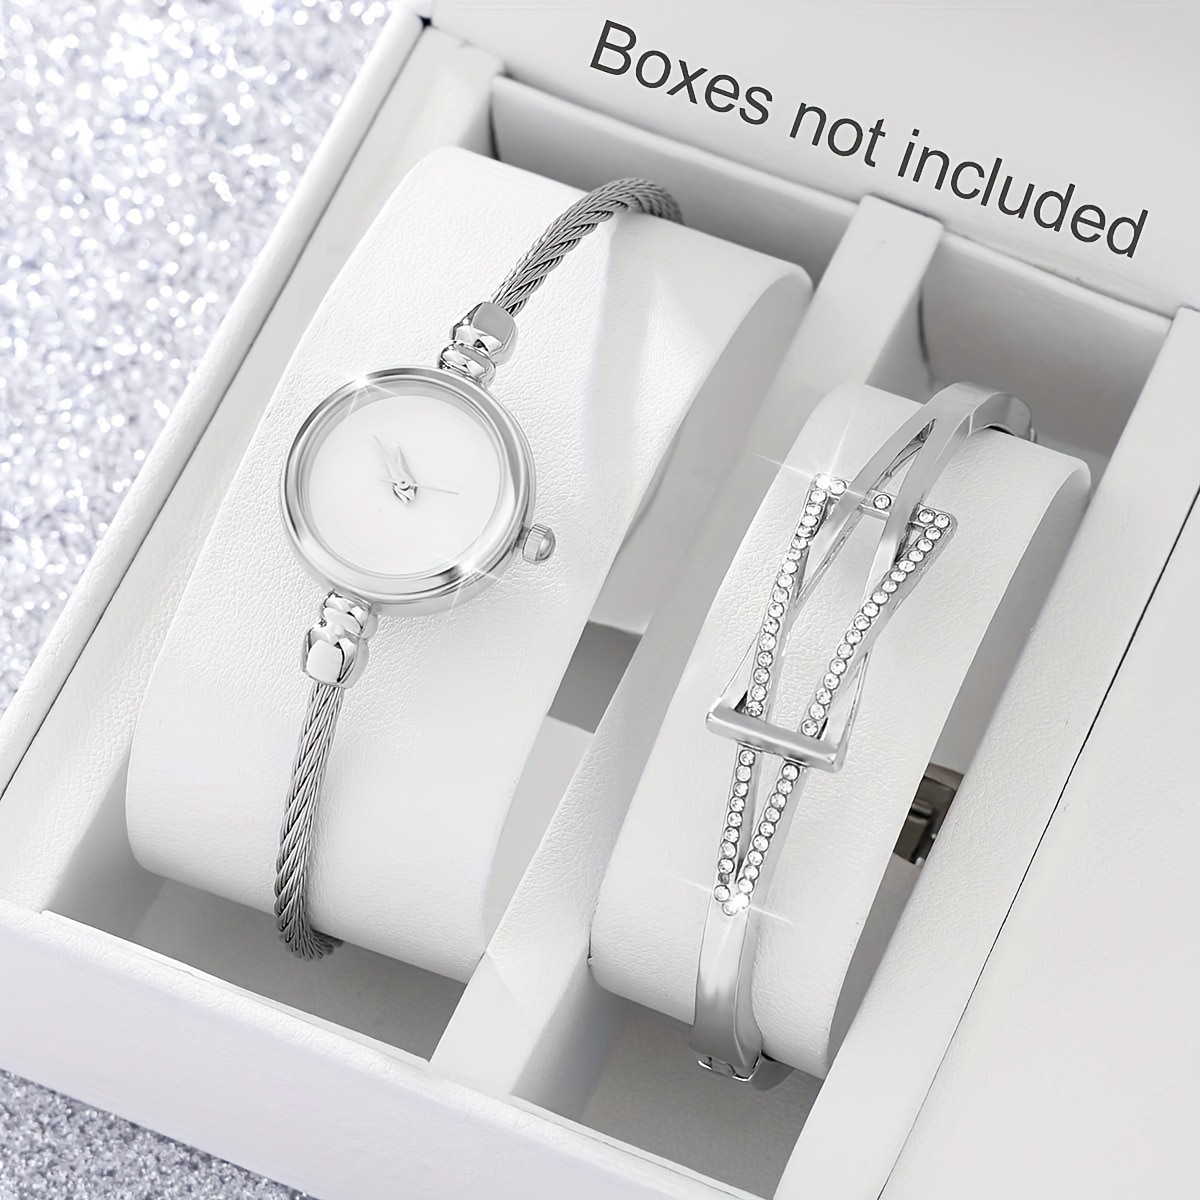 

Elegant Women's Quartz Watch & Bracelet Set - Swiss Movement, Alloy Case, Digital Display With Leather Strap, For Smart Features, Luxury